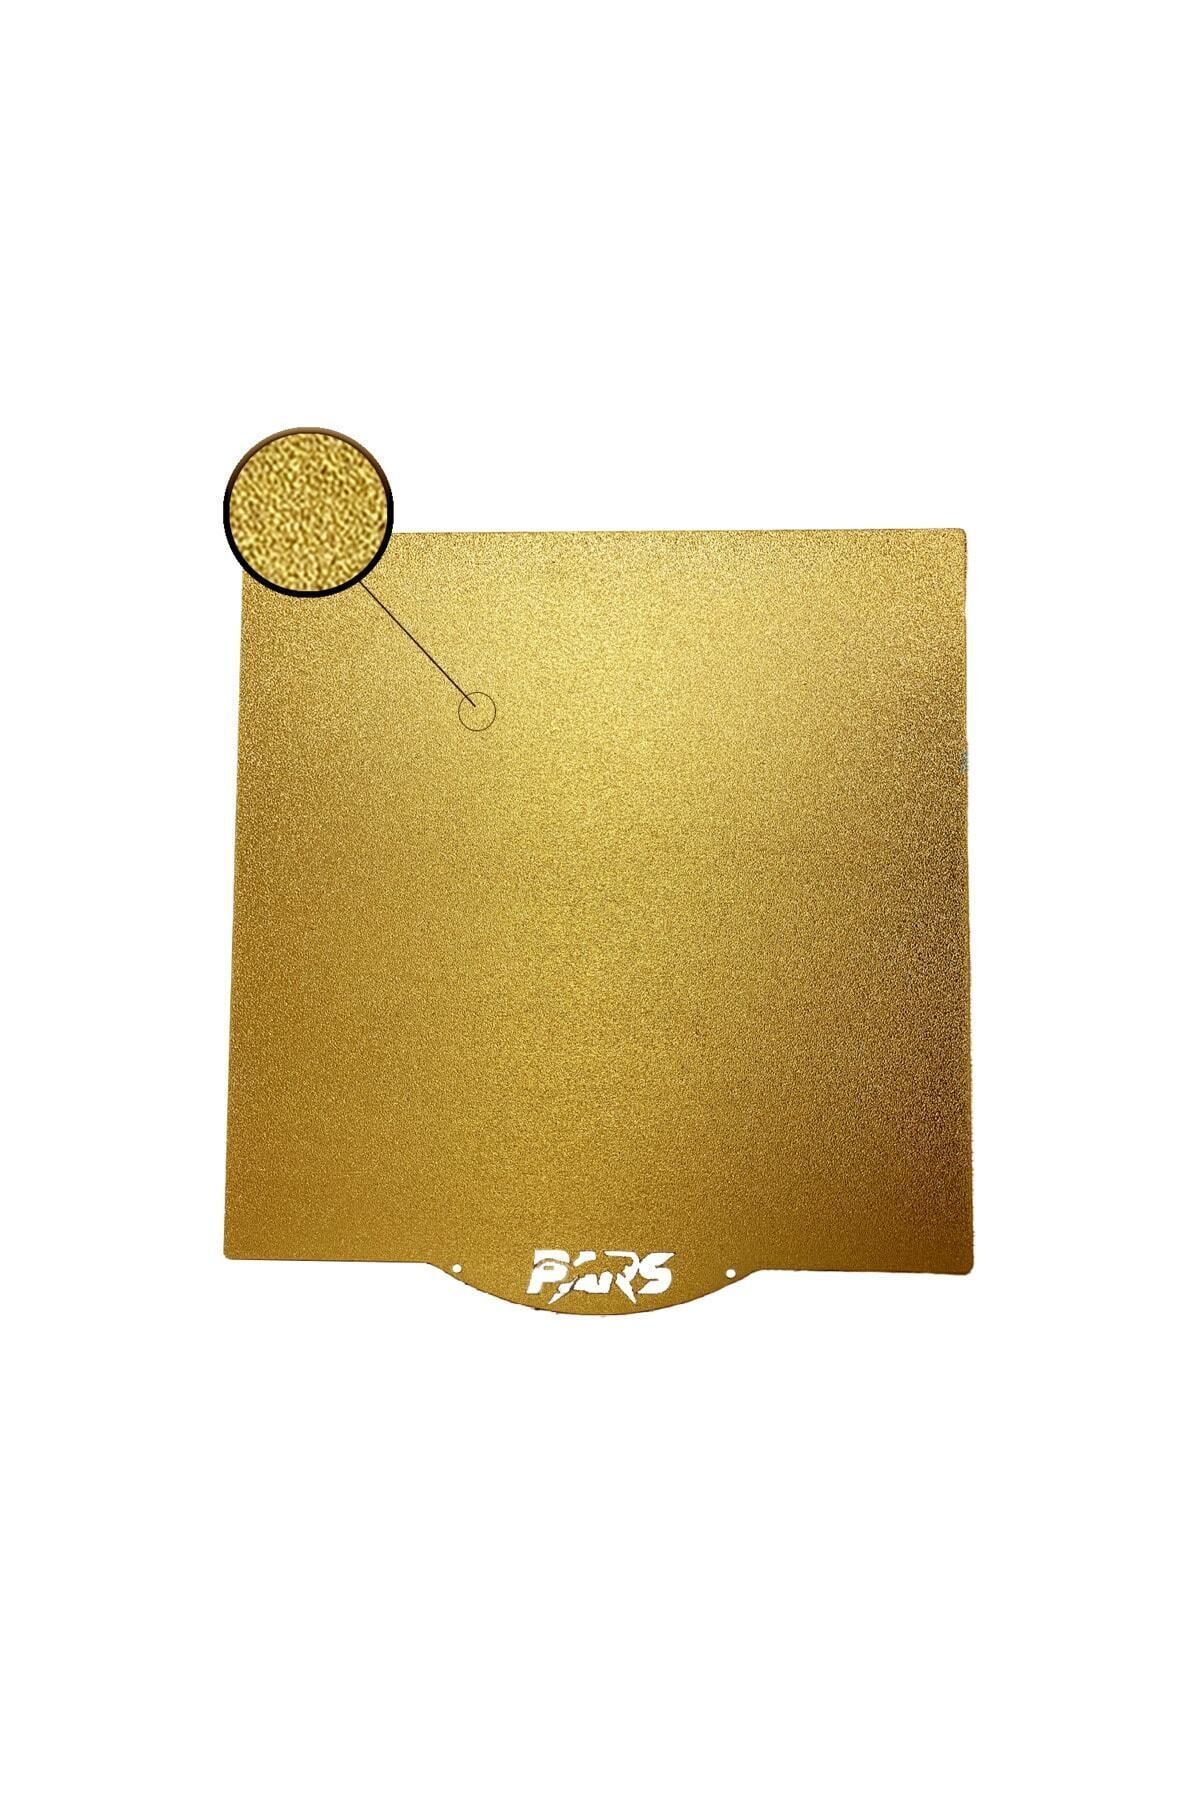 Pars 510x510 Mm Gold Pei Kaplı Özel Yay Çeliği Tabla Magnetsiz